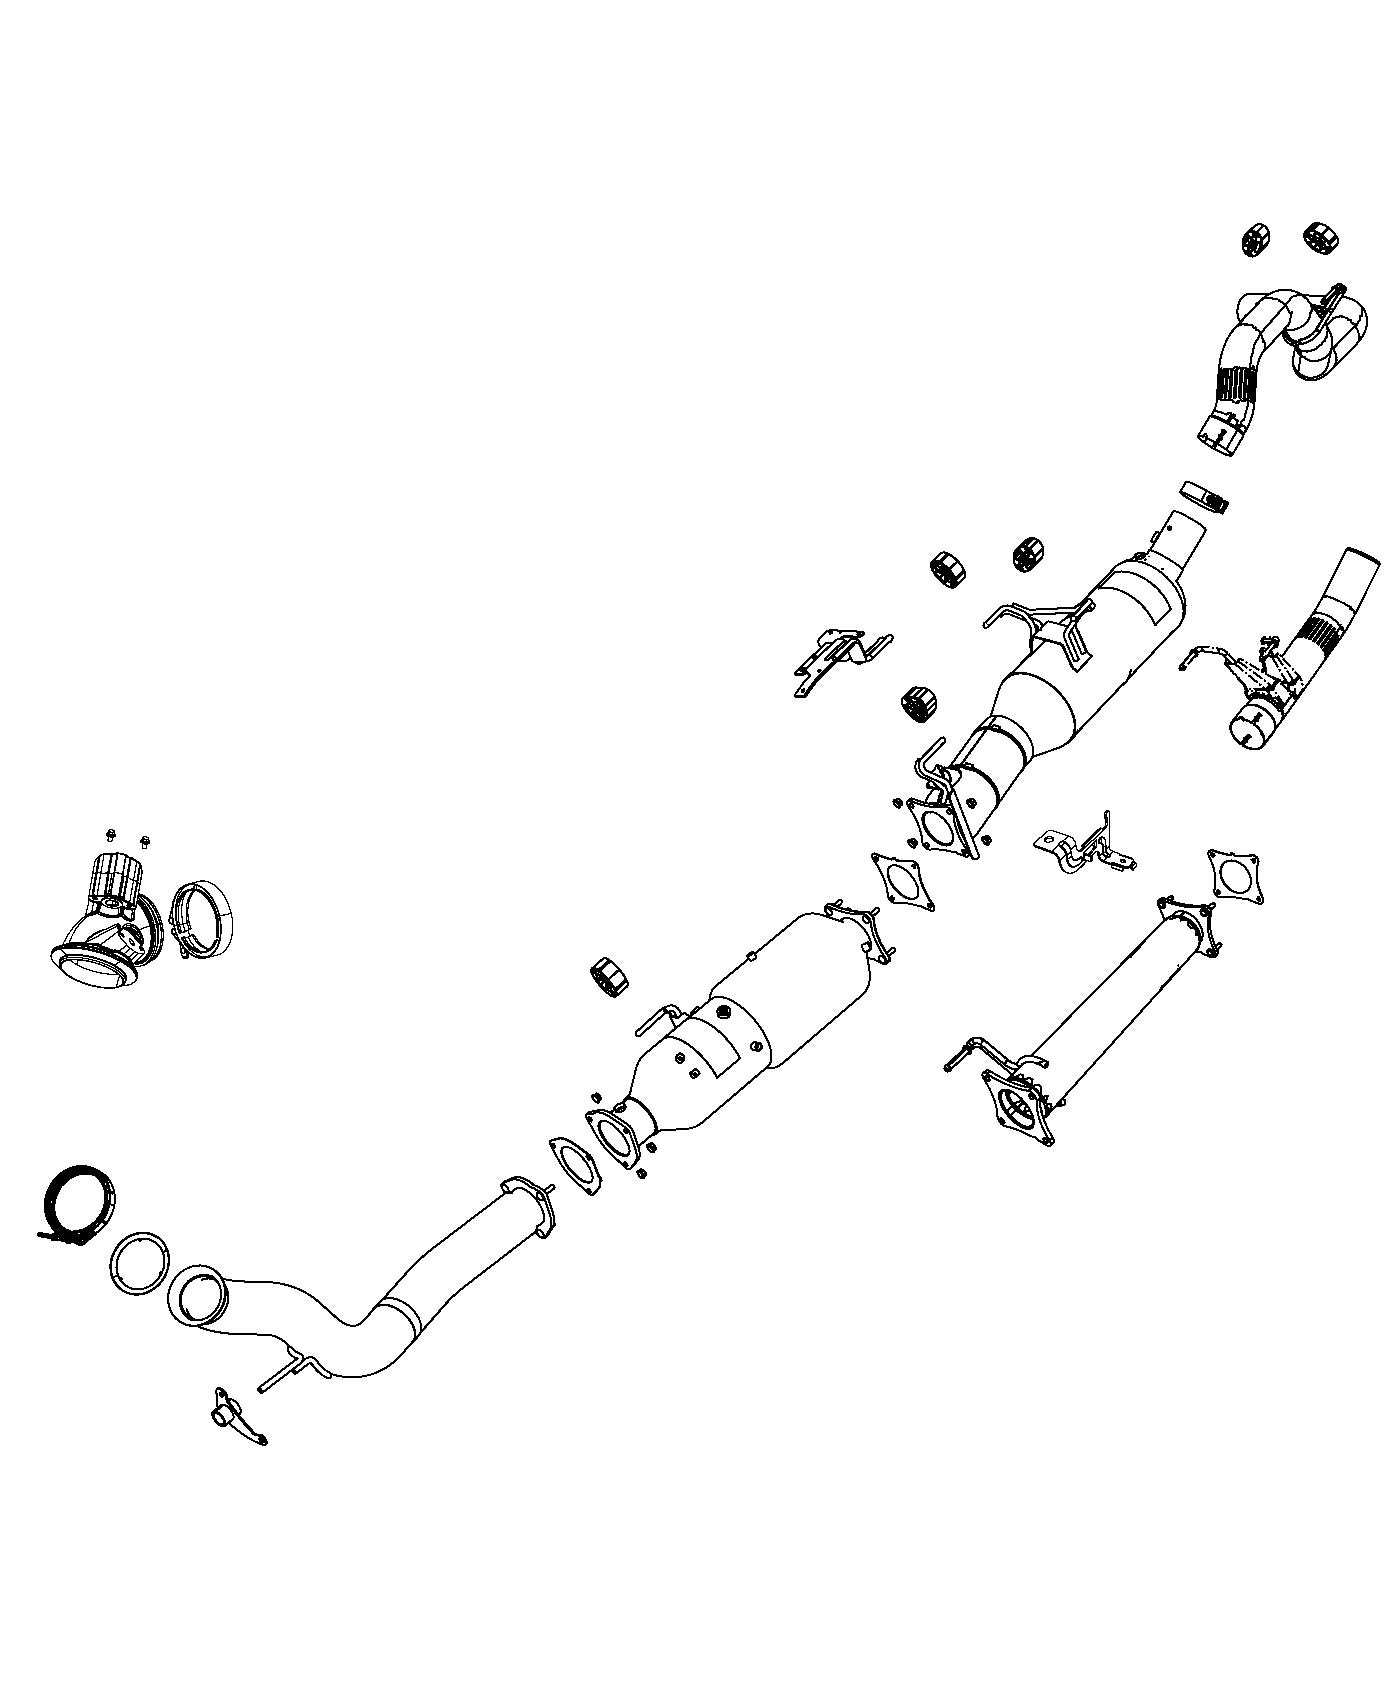 Exhaust System. Diagram